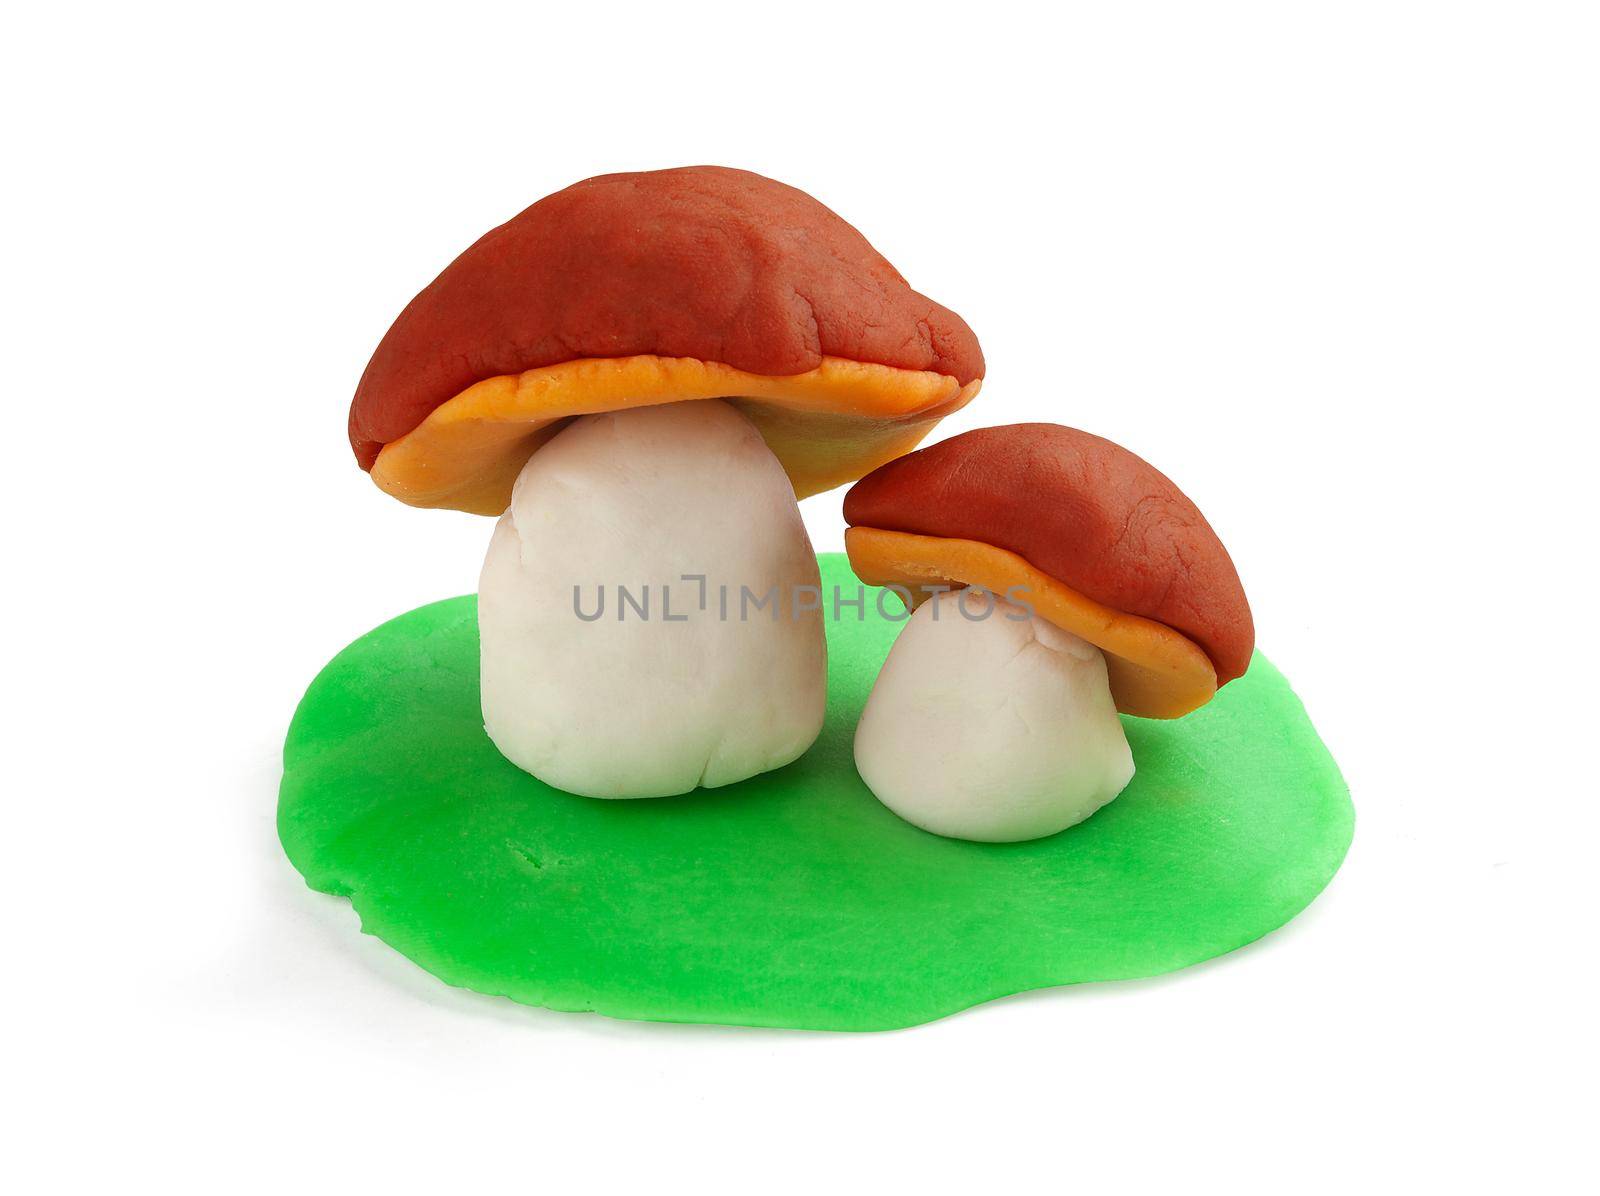 Isoalted plasticine mushrooms on gress by Angorius